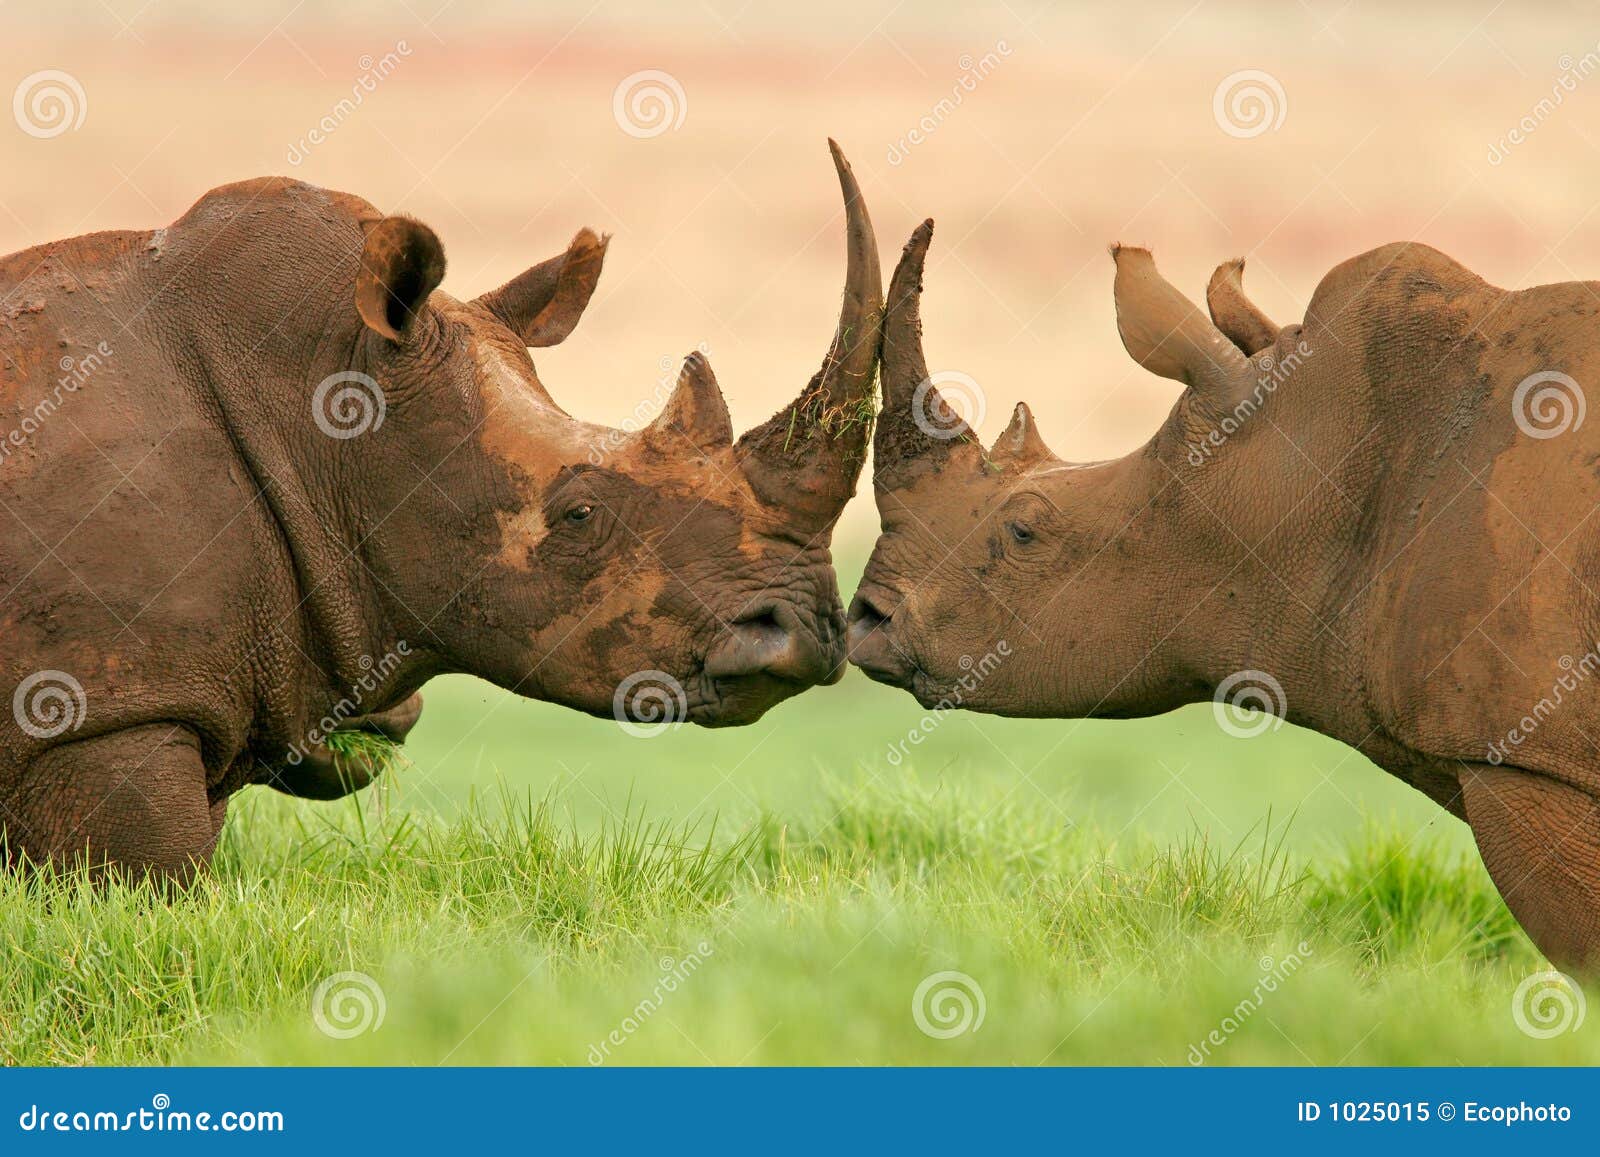 white rhinoceros, south africa